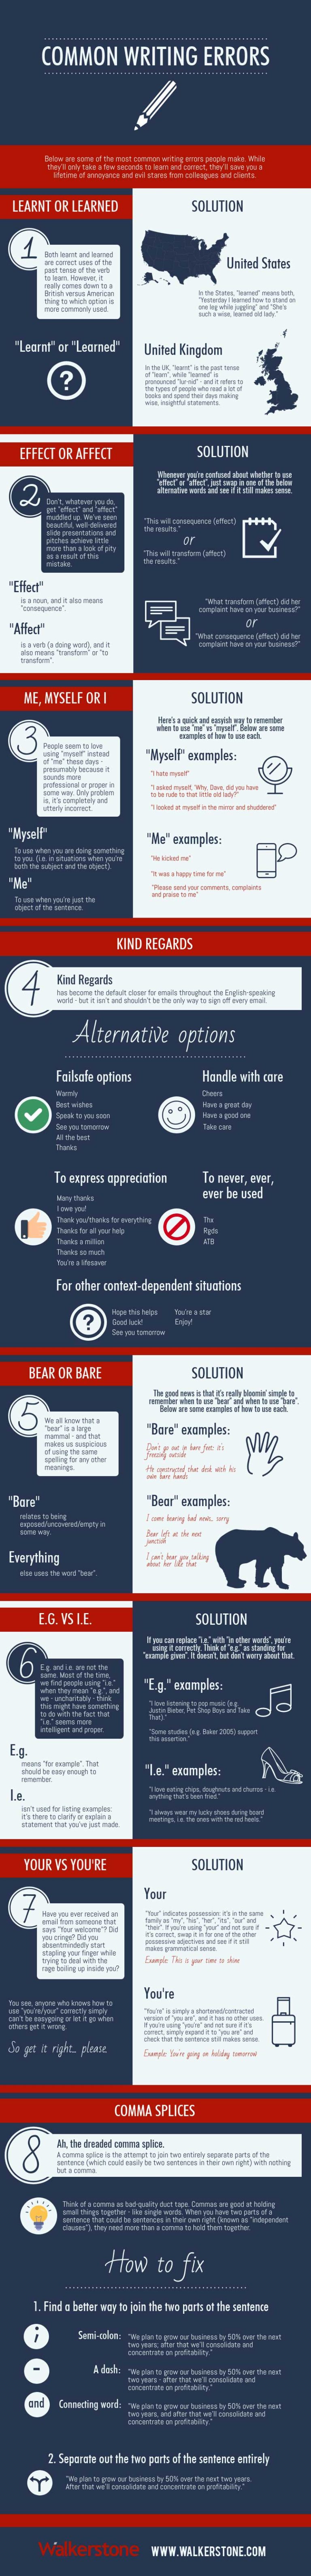 Common Writing Errors Infographic